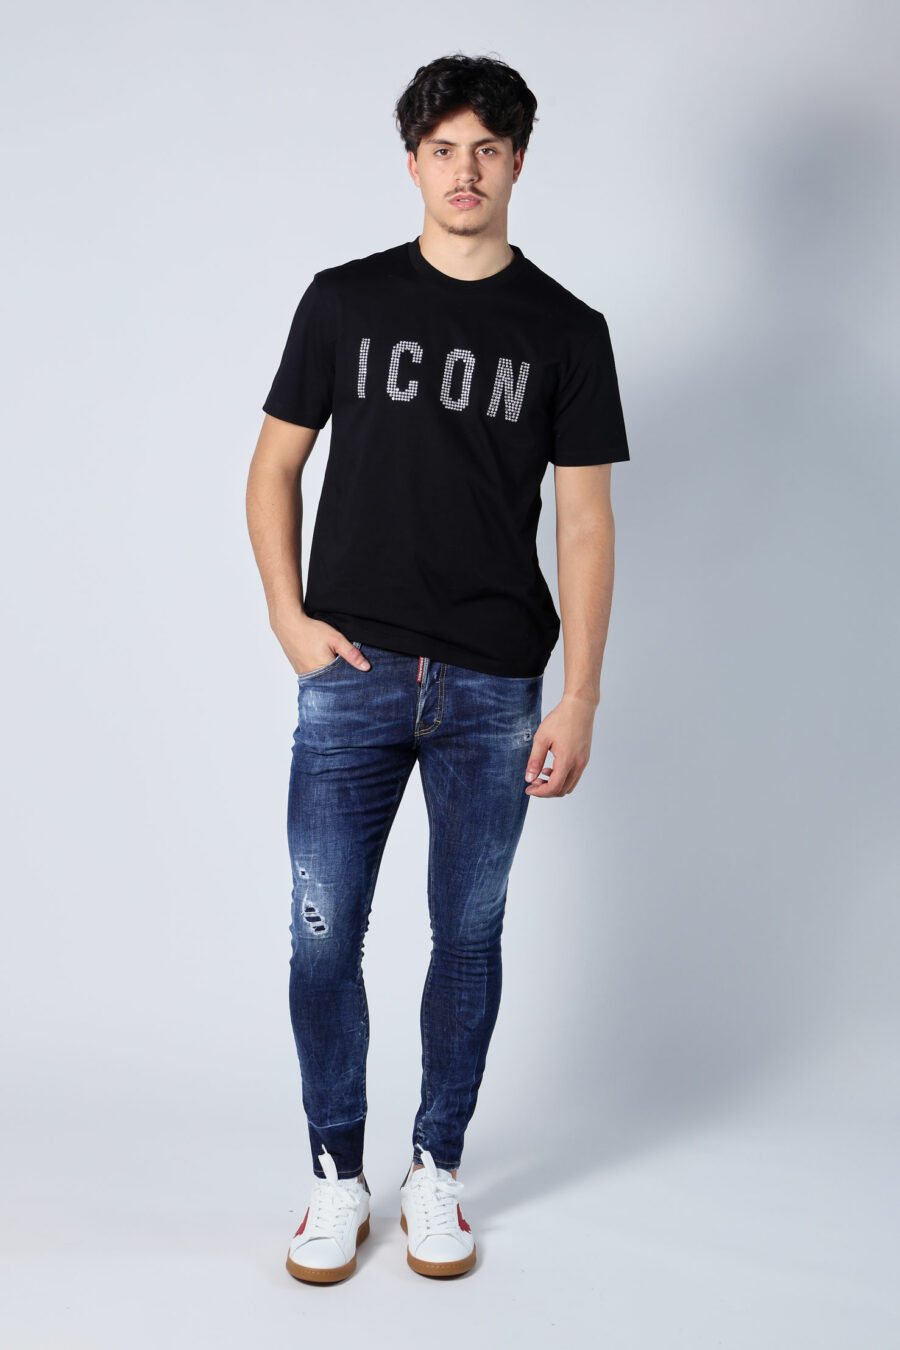 Black T-shirt with white checked "icon" logo - Untitled Catalog 05672